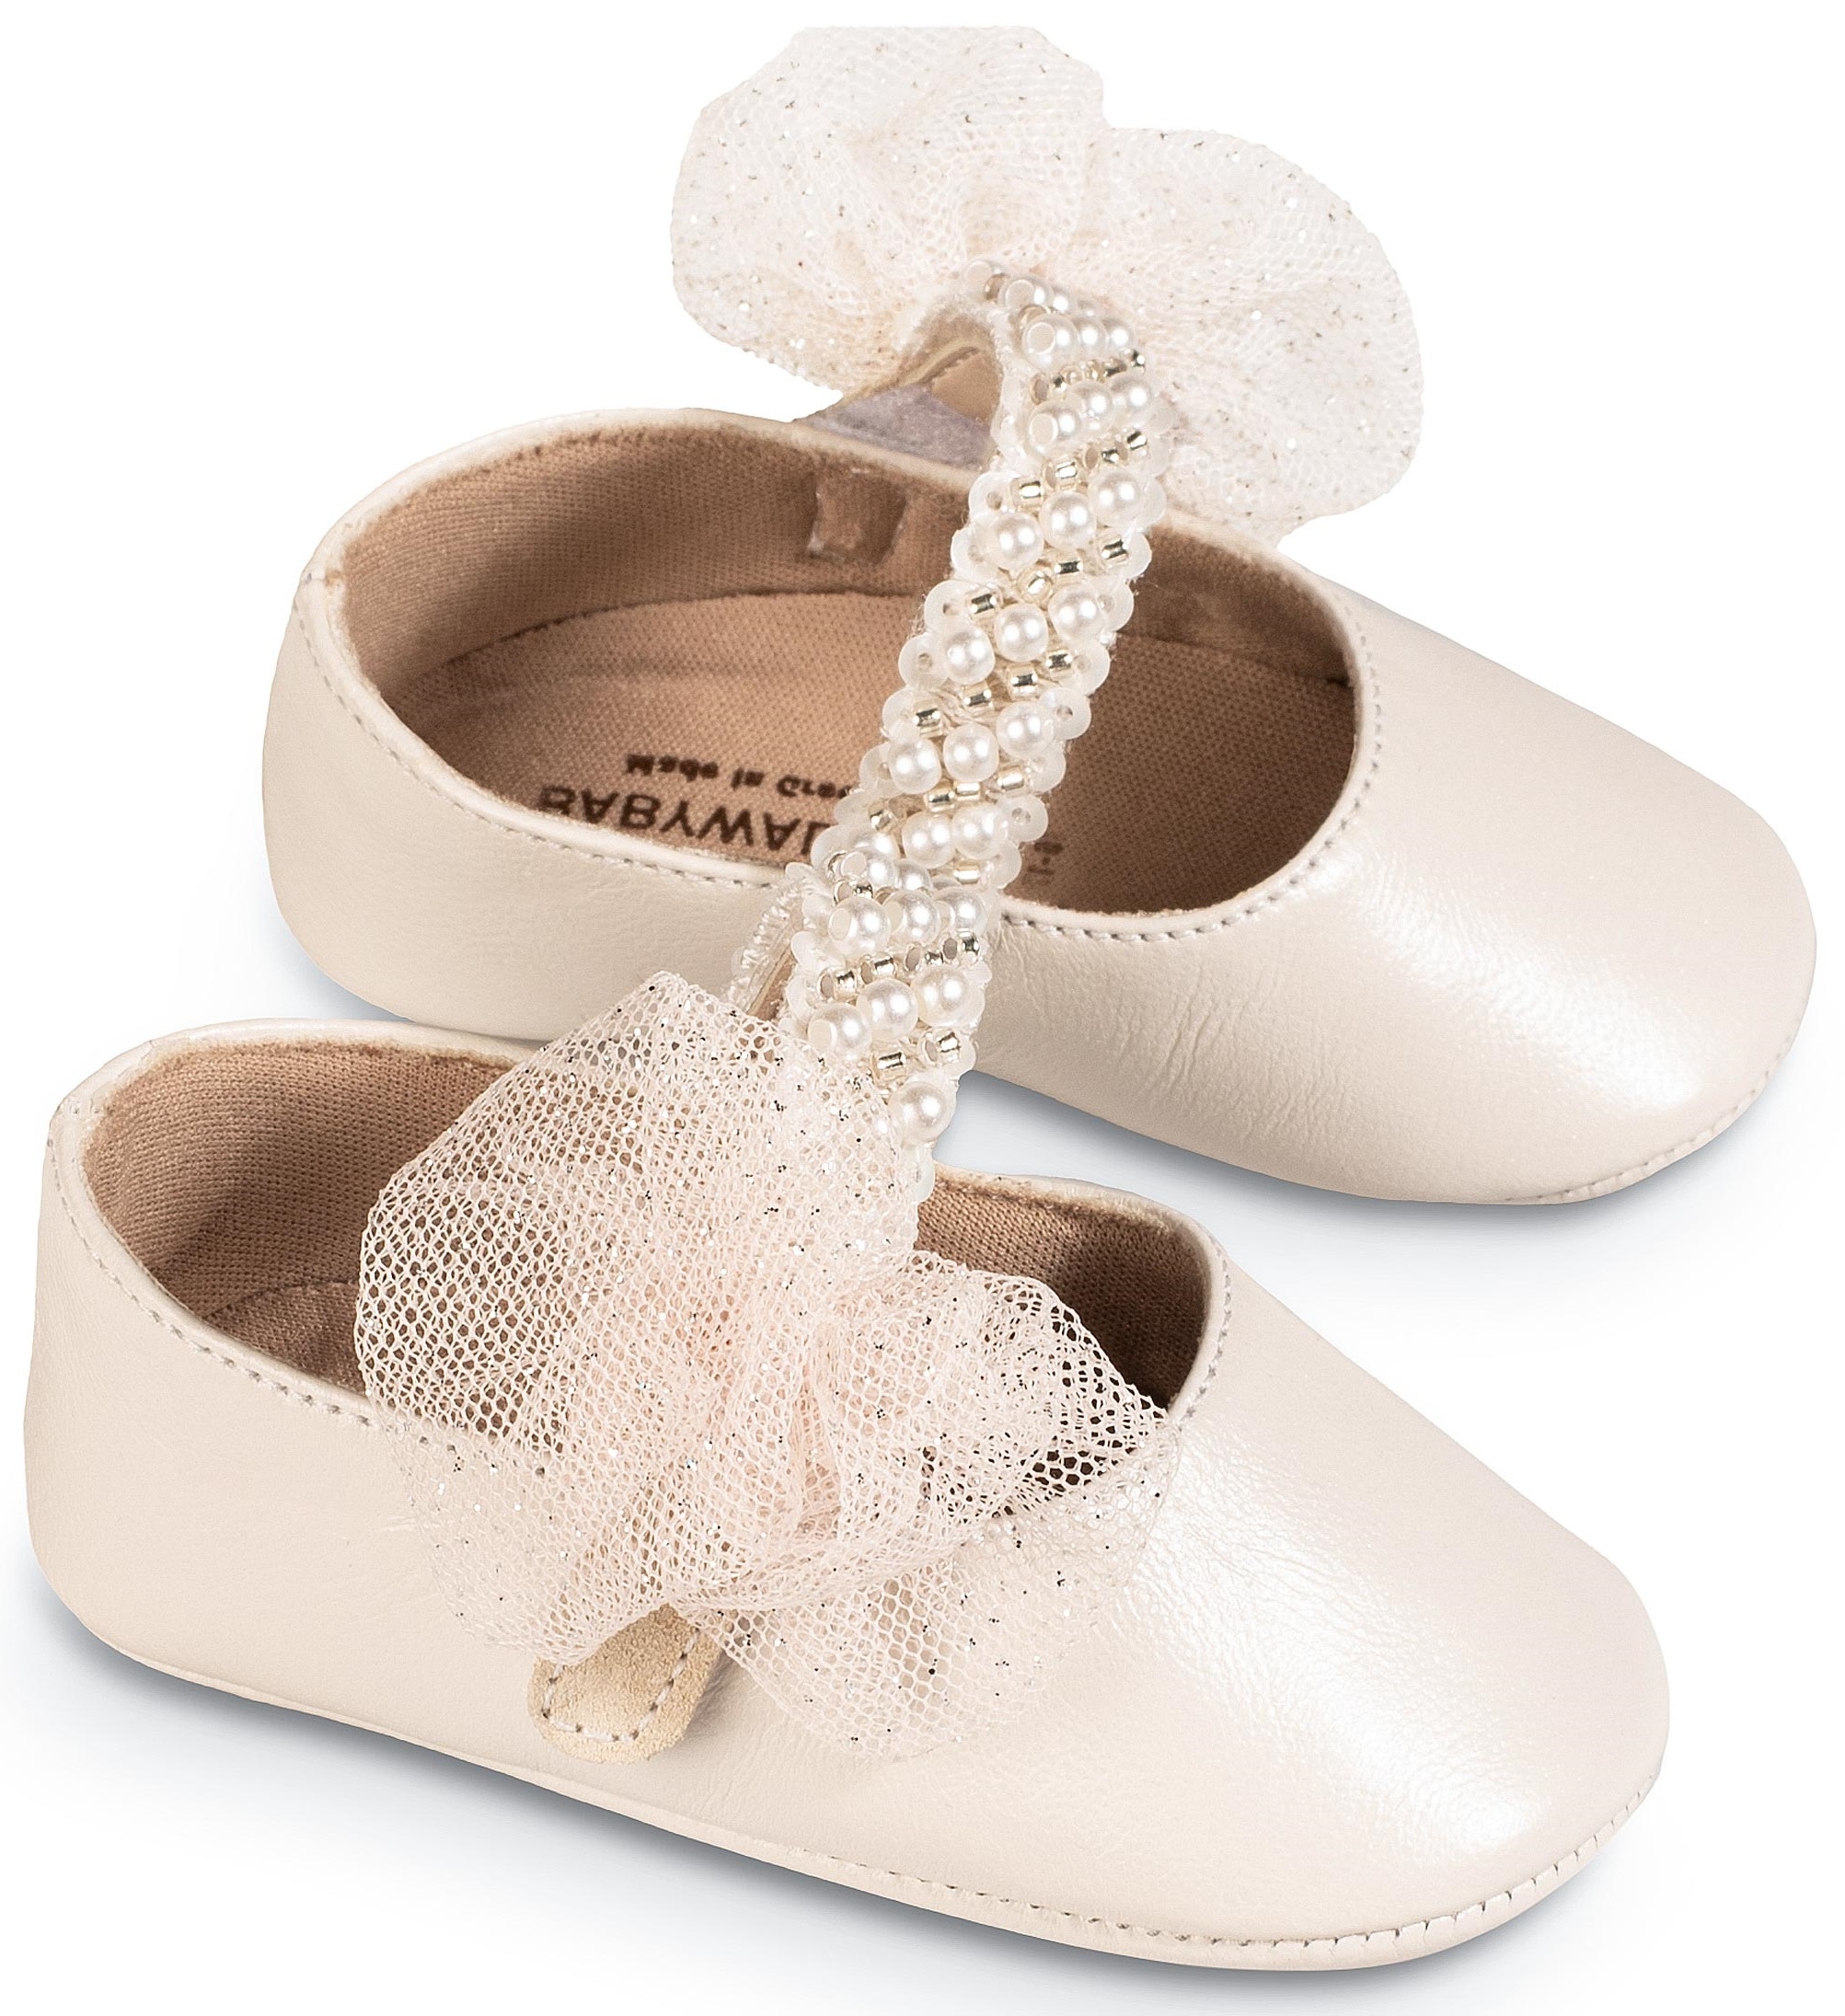 Babywalker Αγκαλίτσας Εκρού πέρλα & τούλι - Βαπτιστικά παπούτσια για κορίτσι